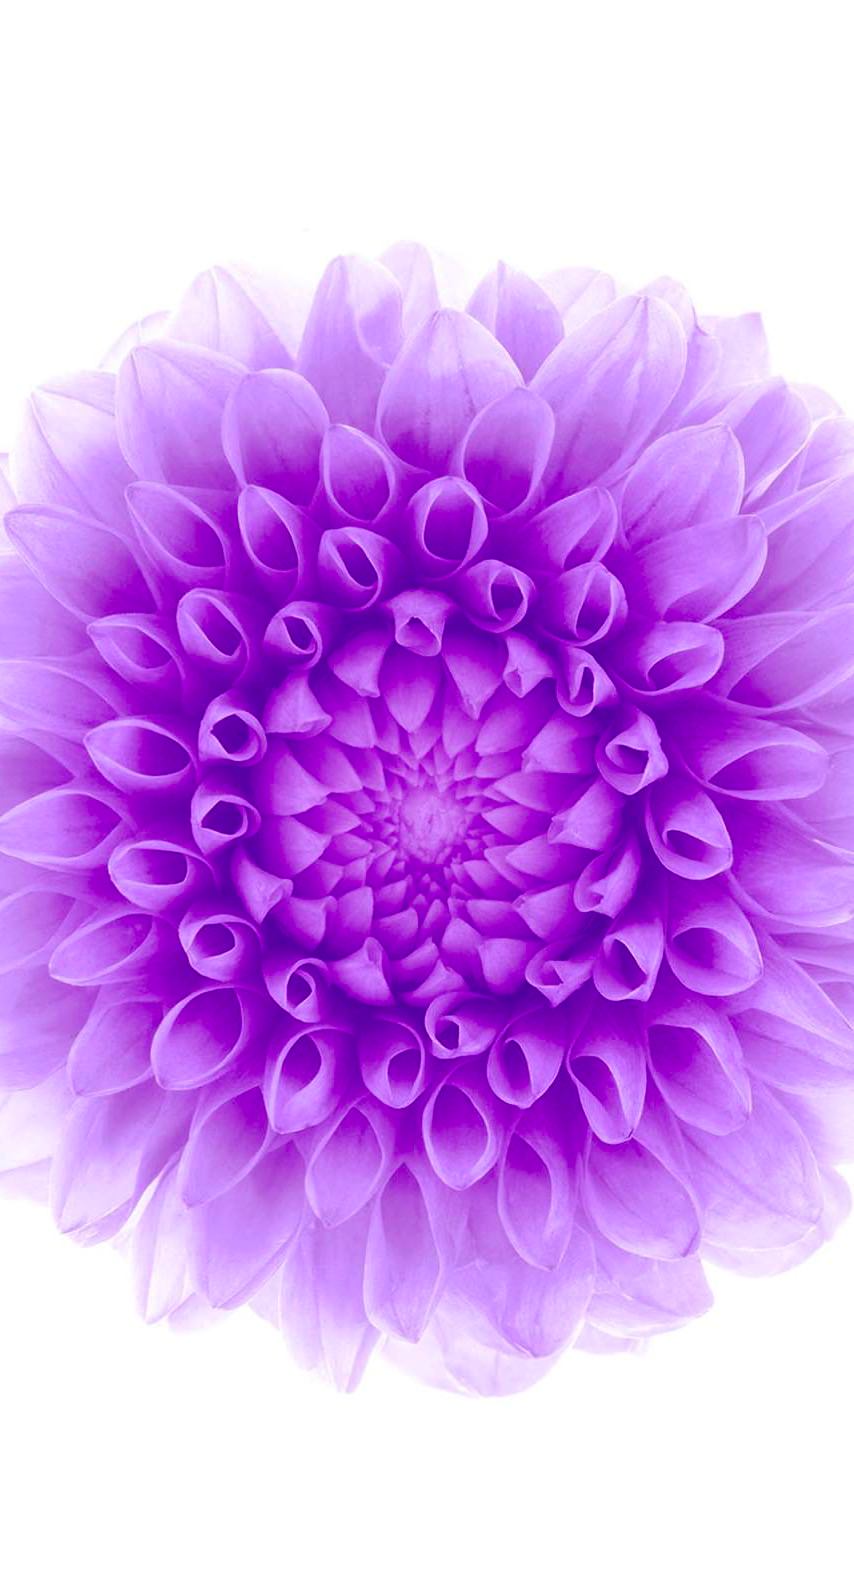 Flower Purple White Shelf Wallpaper Sc Iphone8